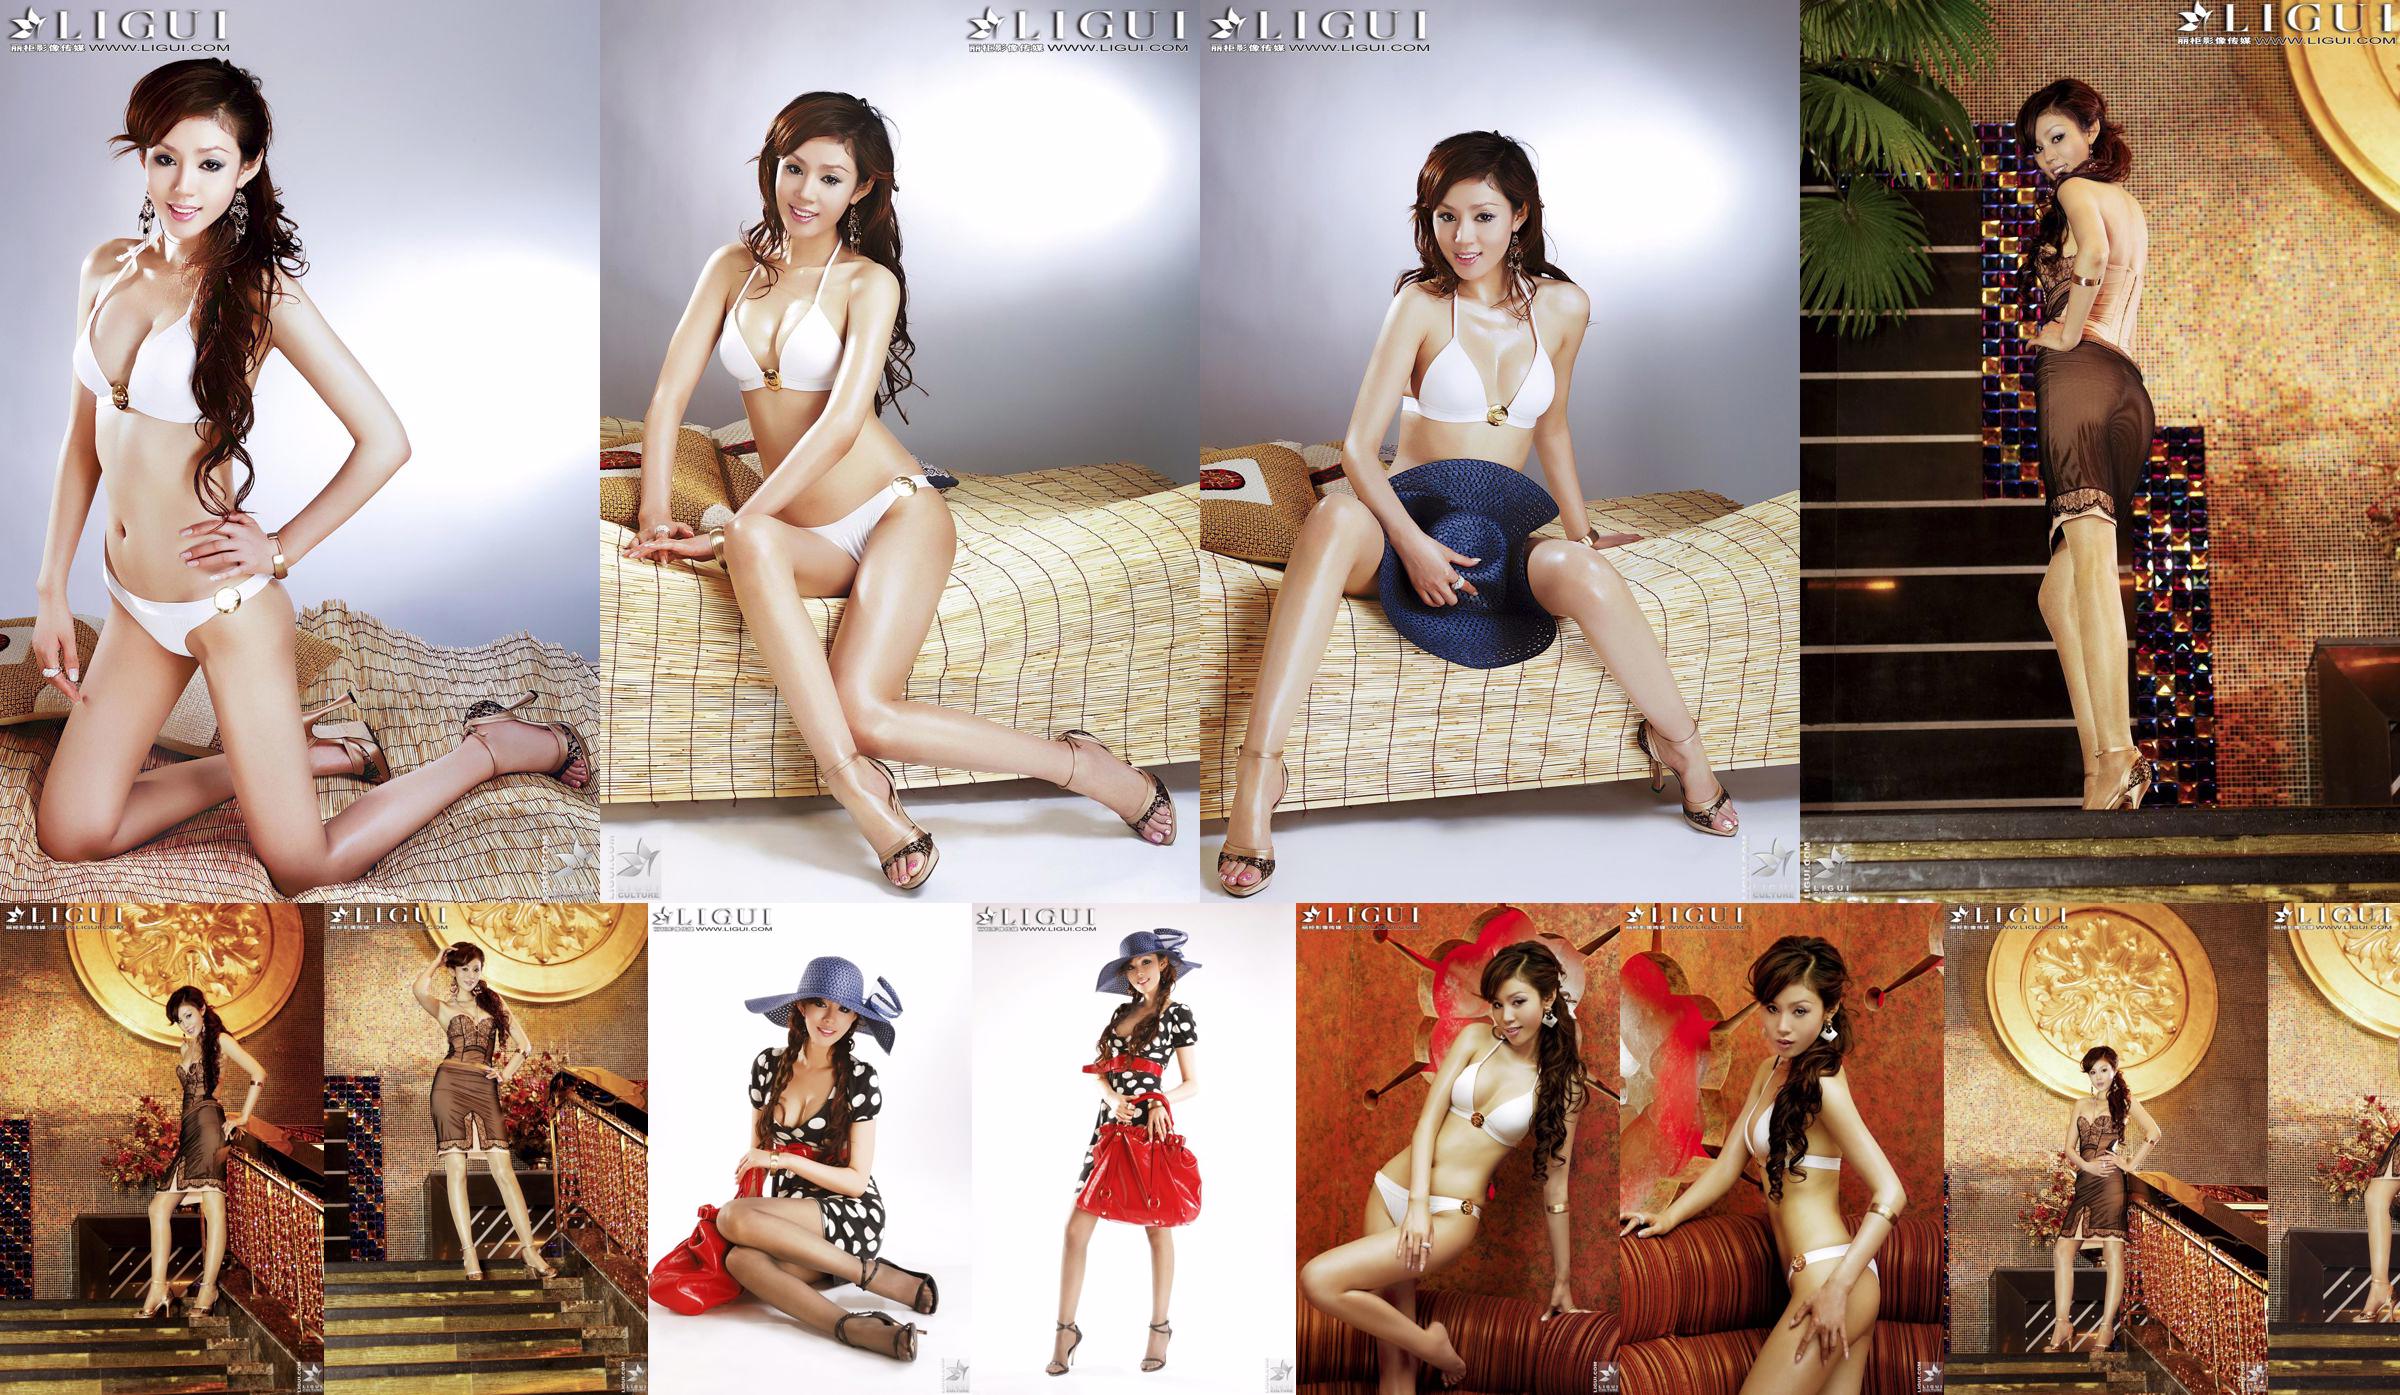 [丽 柜 LiGui] Model Yao Jinjin's "Bikini + Jurk" Mooie benen en zijdeachtige voeten Foto Foto No.1e444e Pagina 3